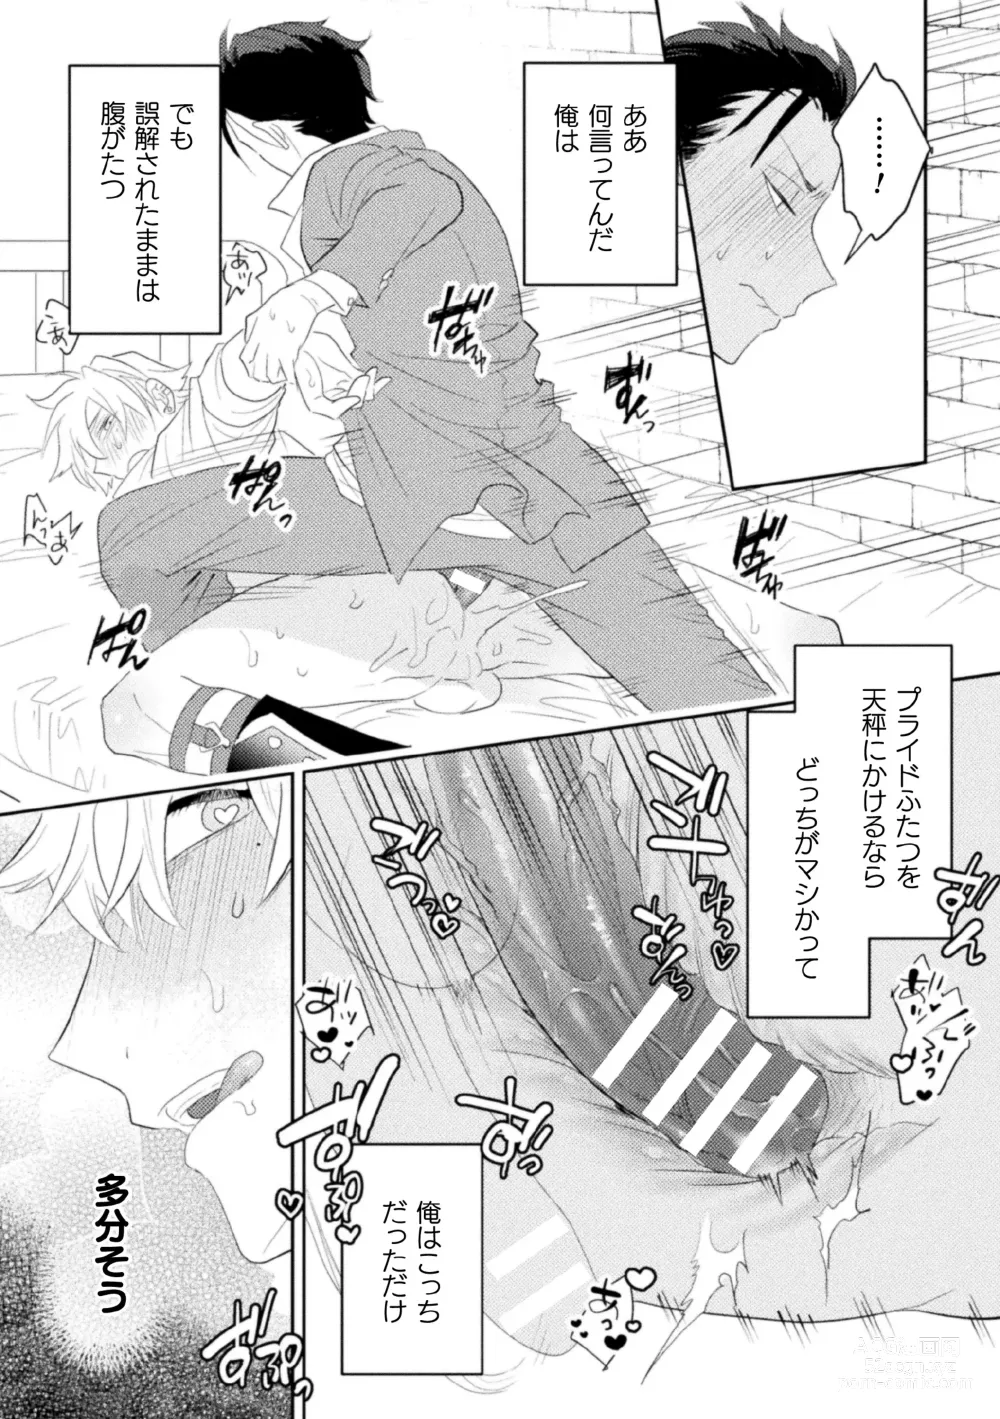 Page 35 of manga Zekkai Rougoku 4 Zekkai no Ori to Inma no Wana